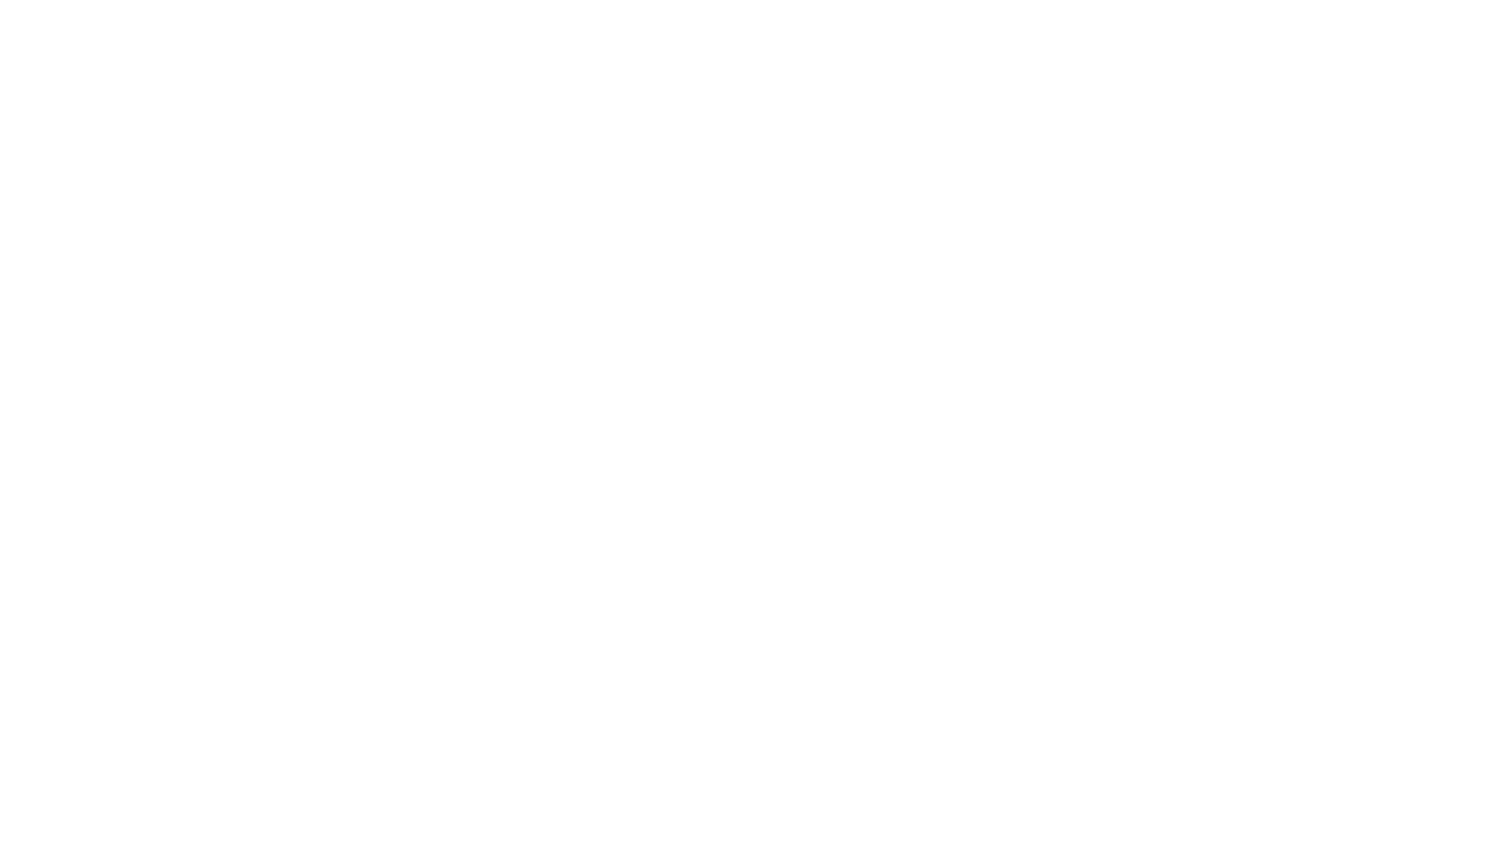 Leo logo